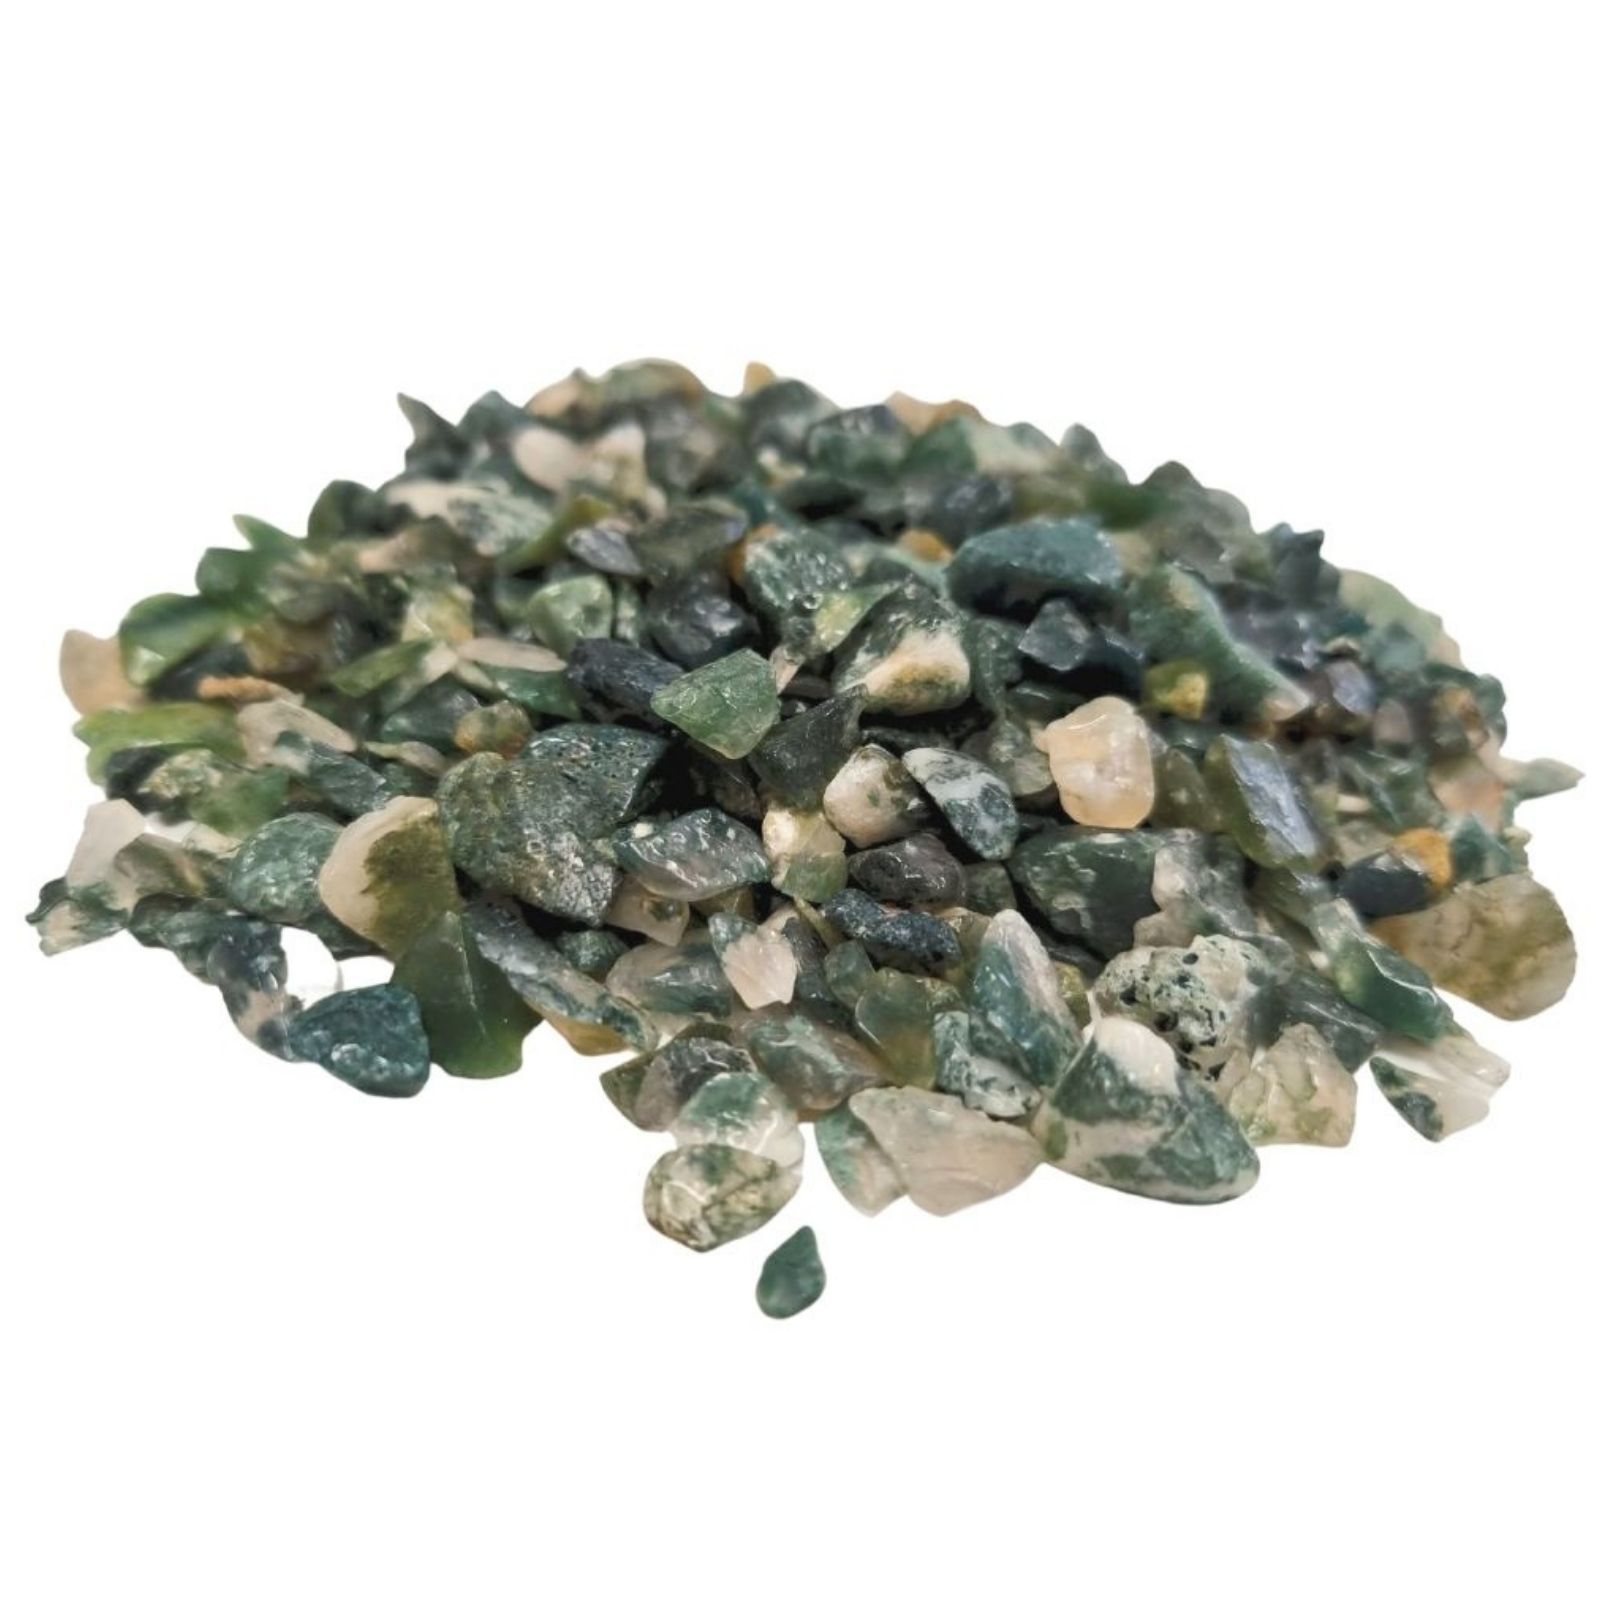 Moss Agate Gemstone Chips Bulk - 1KG